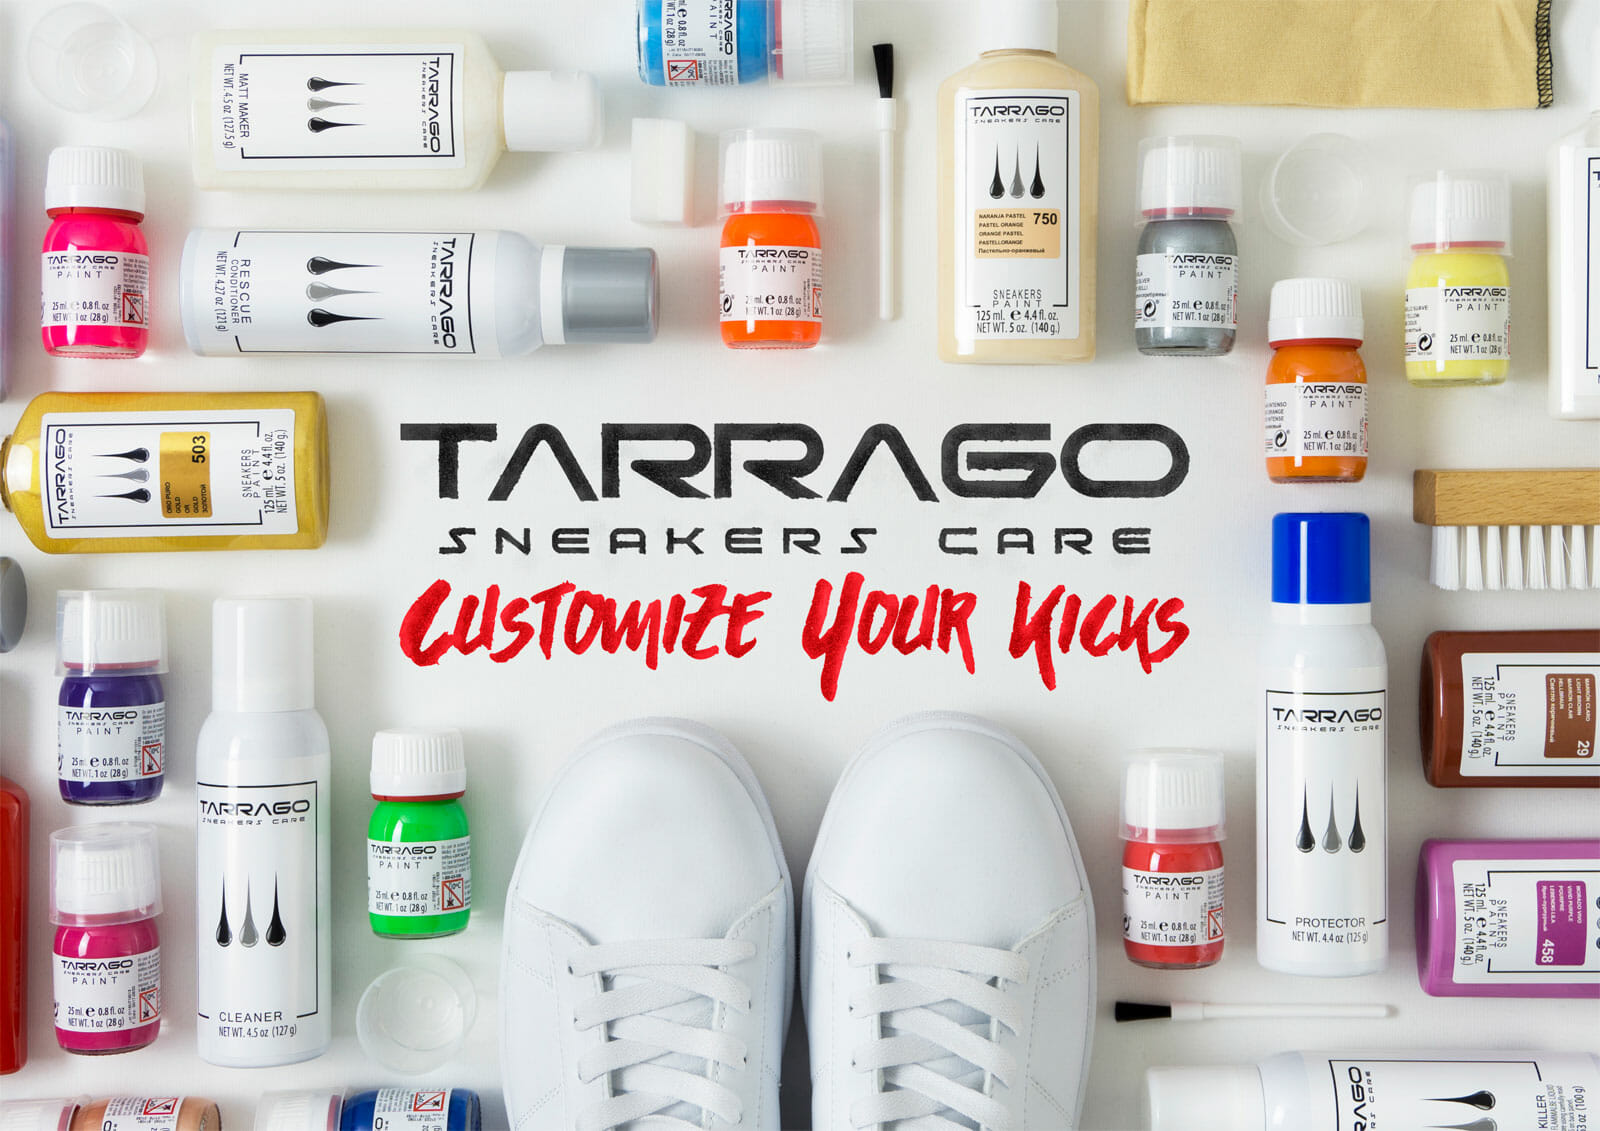 tarrago_sneakers_care_custom_kicks_multirenowacja_01